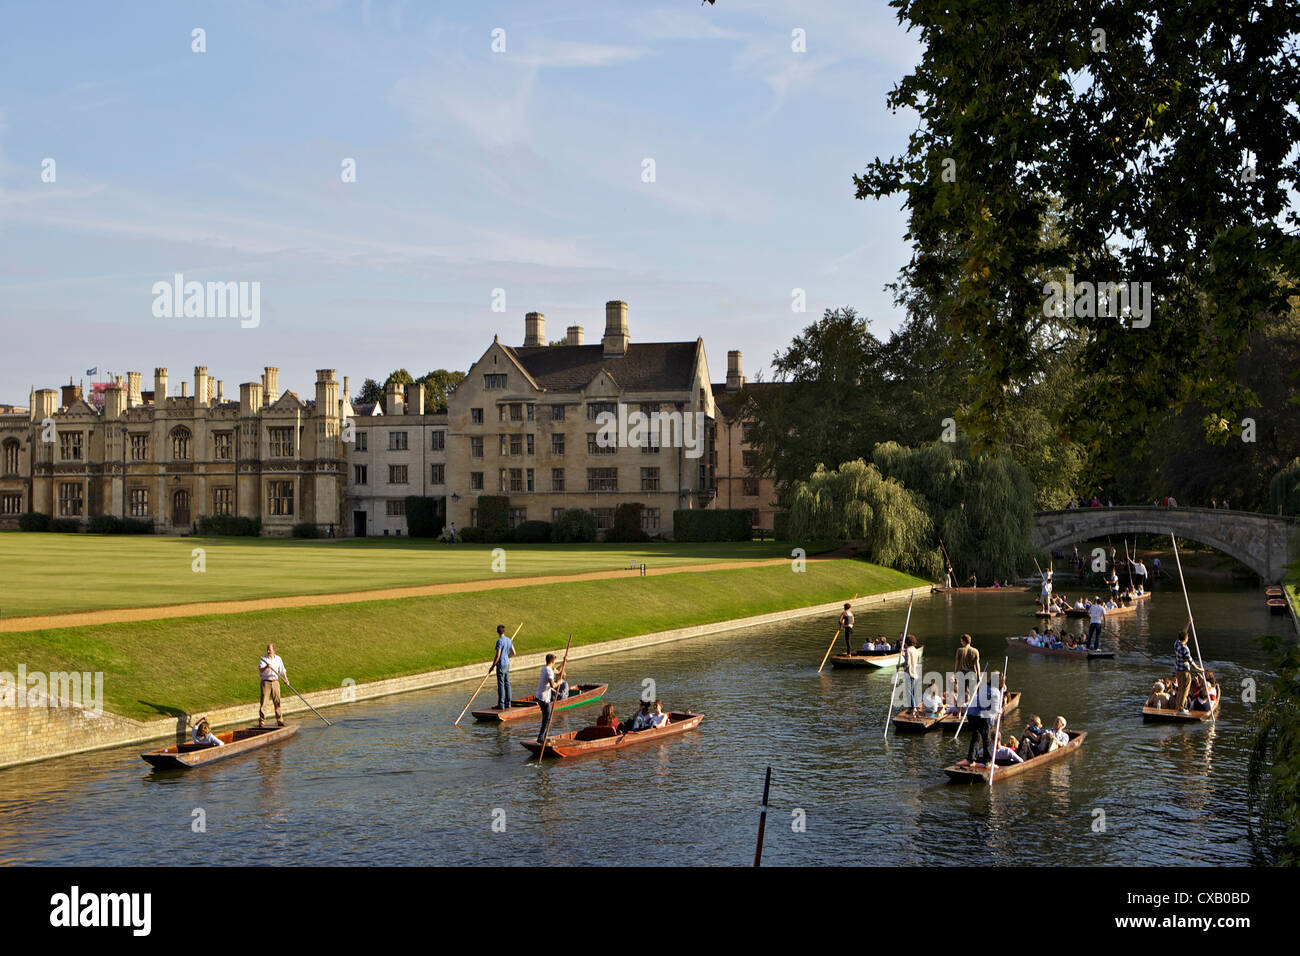 Promenades en barque sur la rivière Cam, Dos, Clare College, Cambridge, Cambridgeshire, Angleterre, Royaume-Uni, Europe Banque D'Images